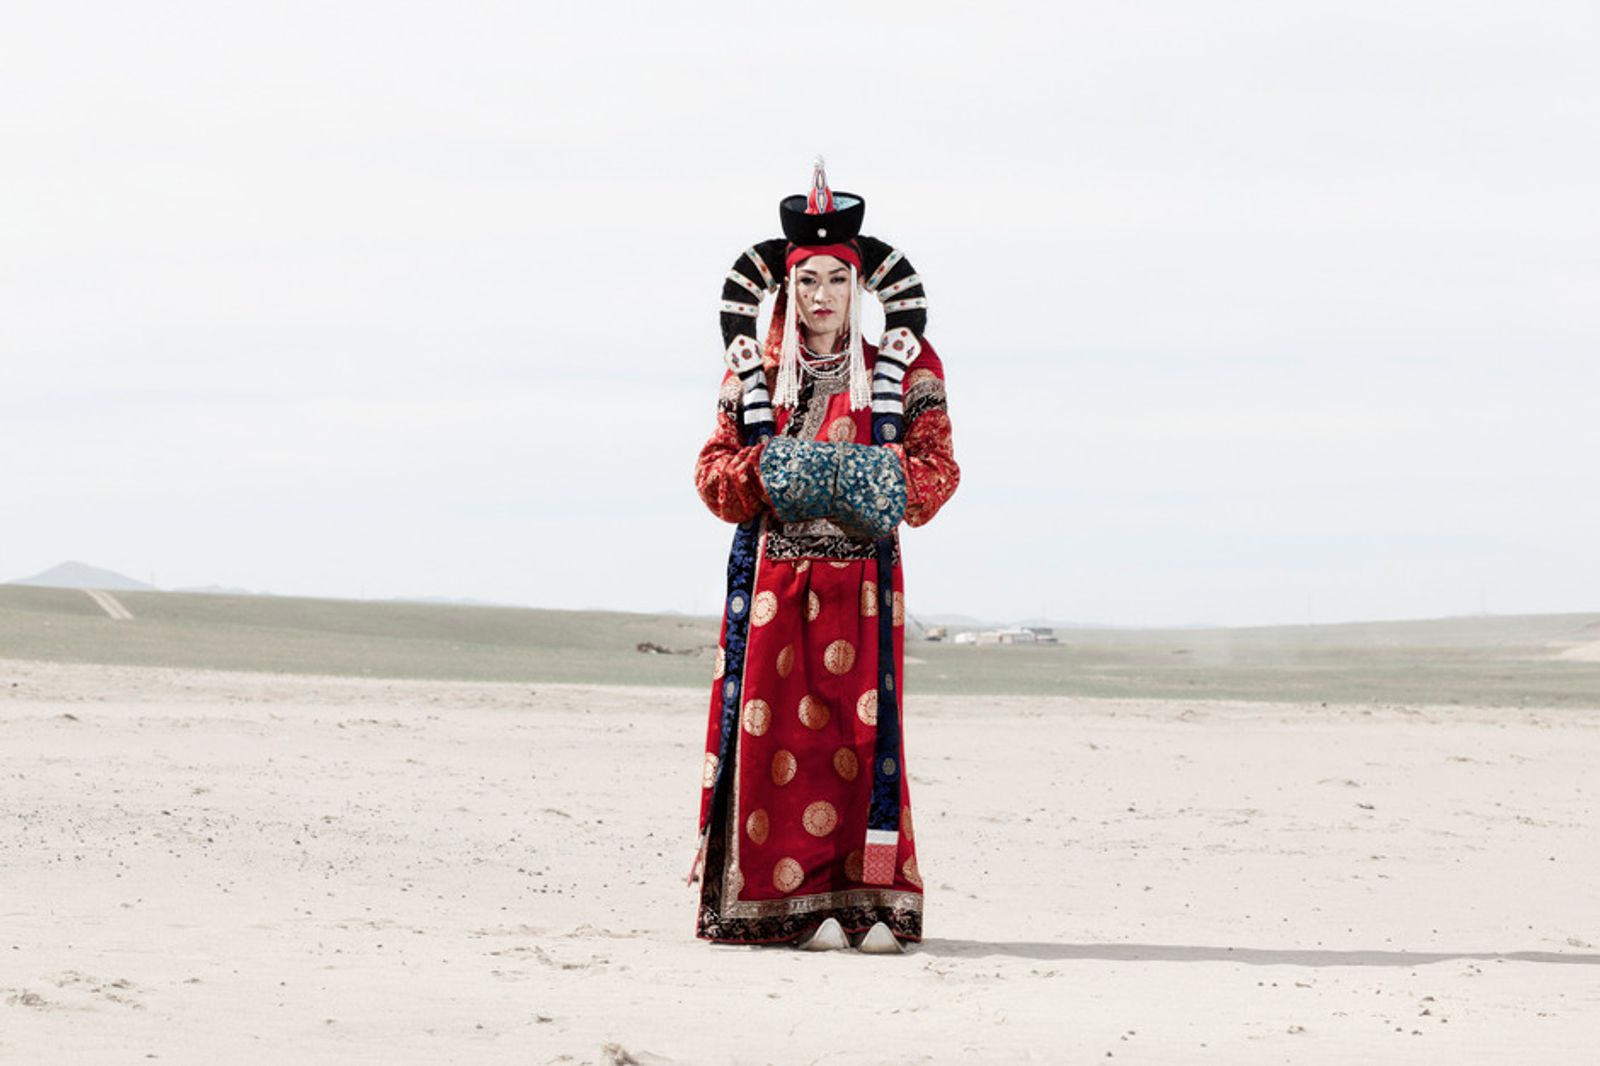 © Alvaro Laiz - Vanity on a traditional mongolian queen costume